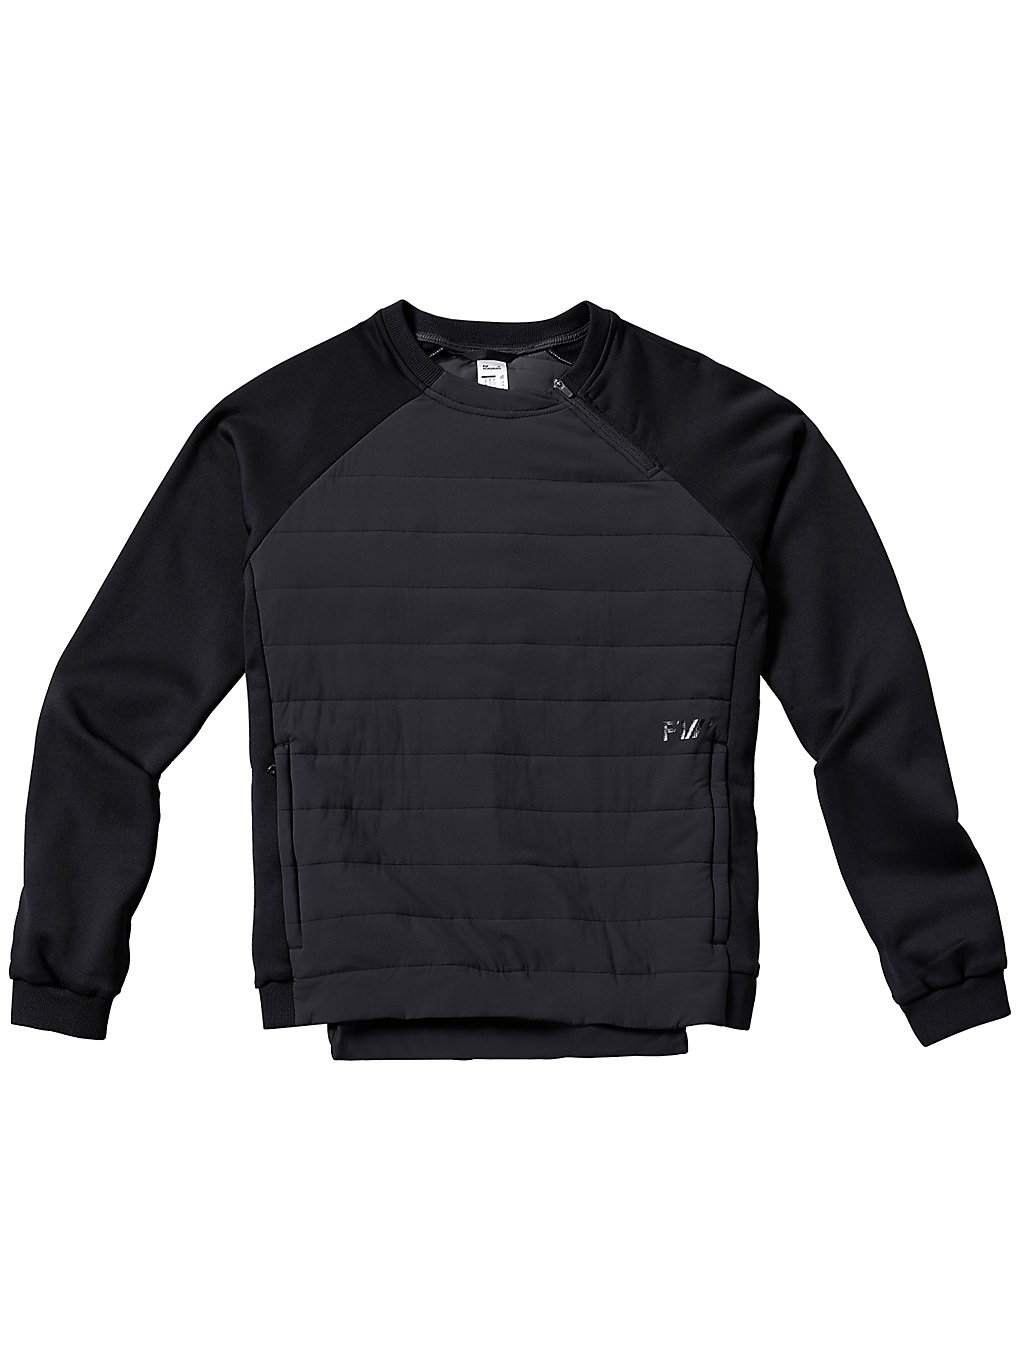 FW Manifest Crew Neck Fleece Pullover slate black kaufen